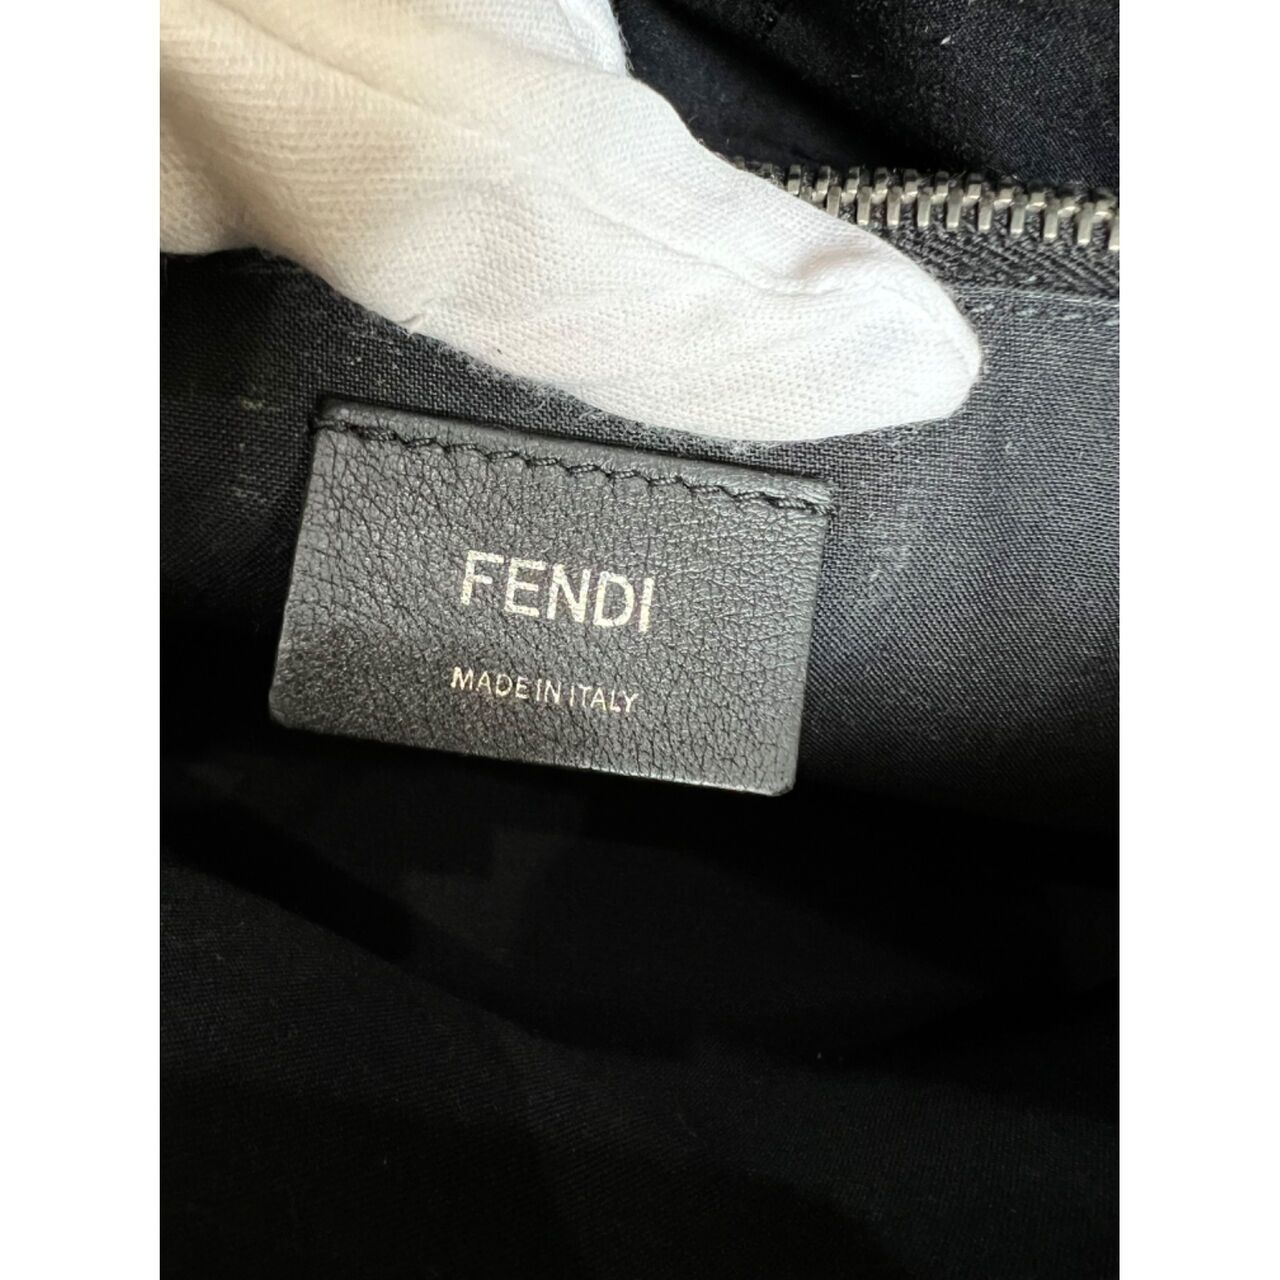 Fendi By The Way Small Black Leather SHW Handbag